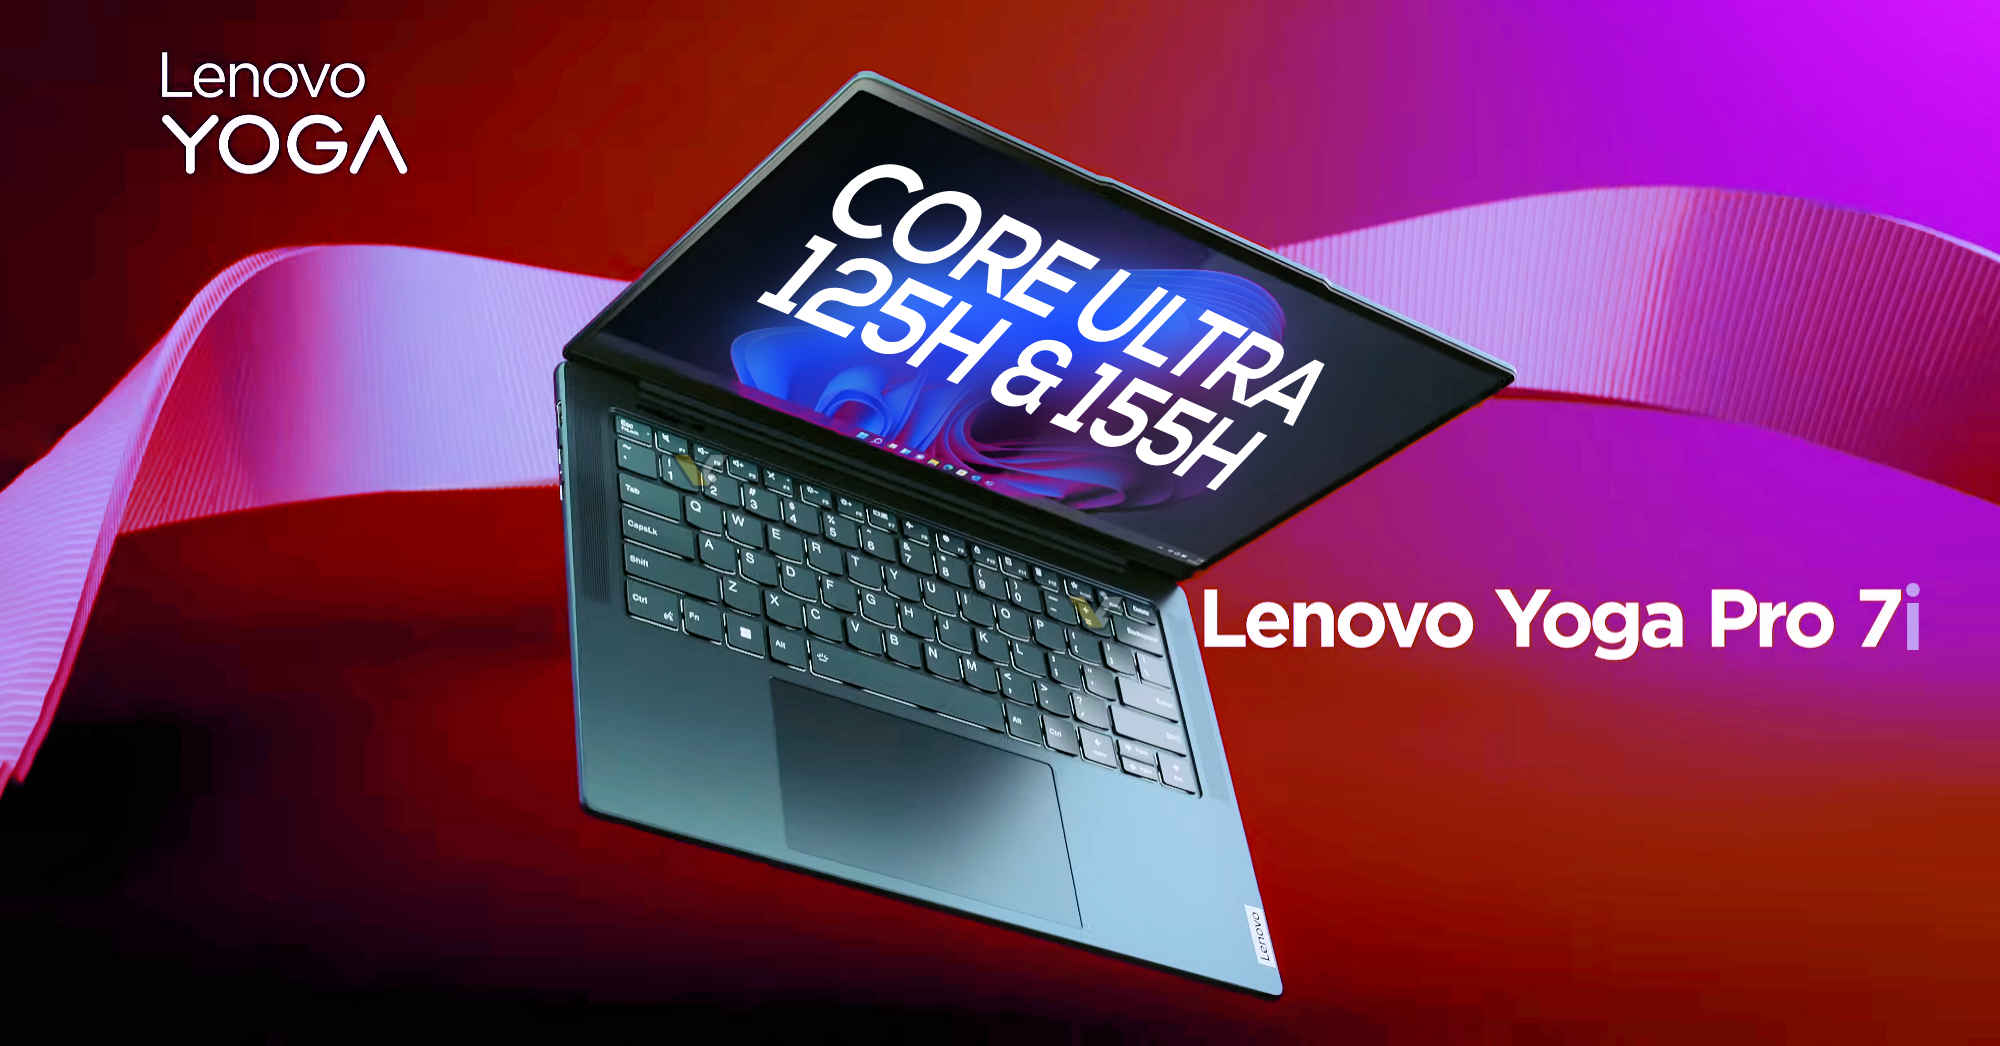 Intel Core Ultra 5 125H & Ultra 7 155H Lenovo Yoga laptops listed